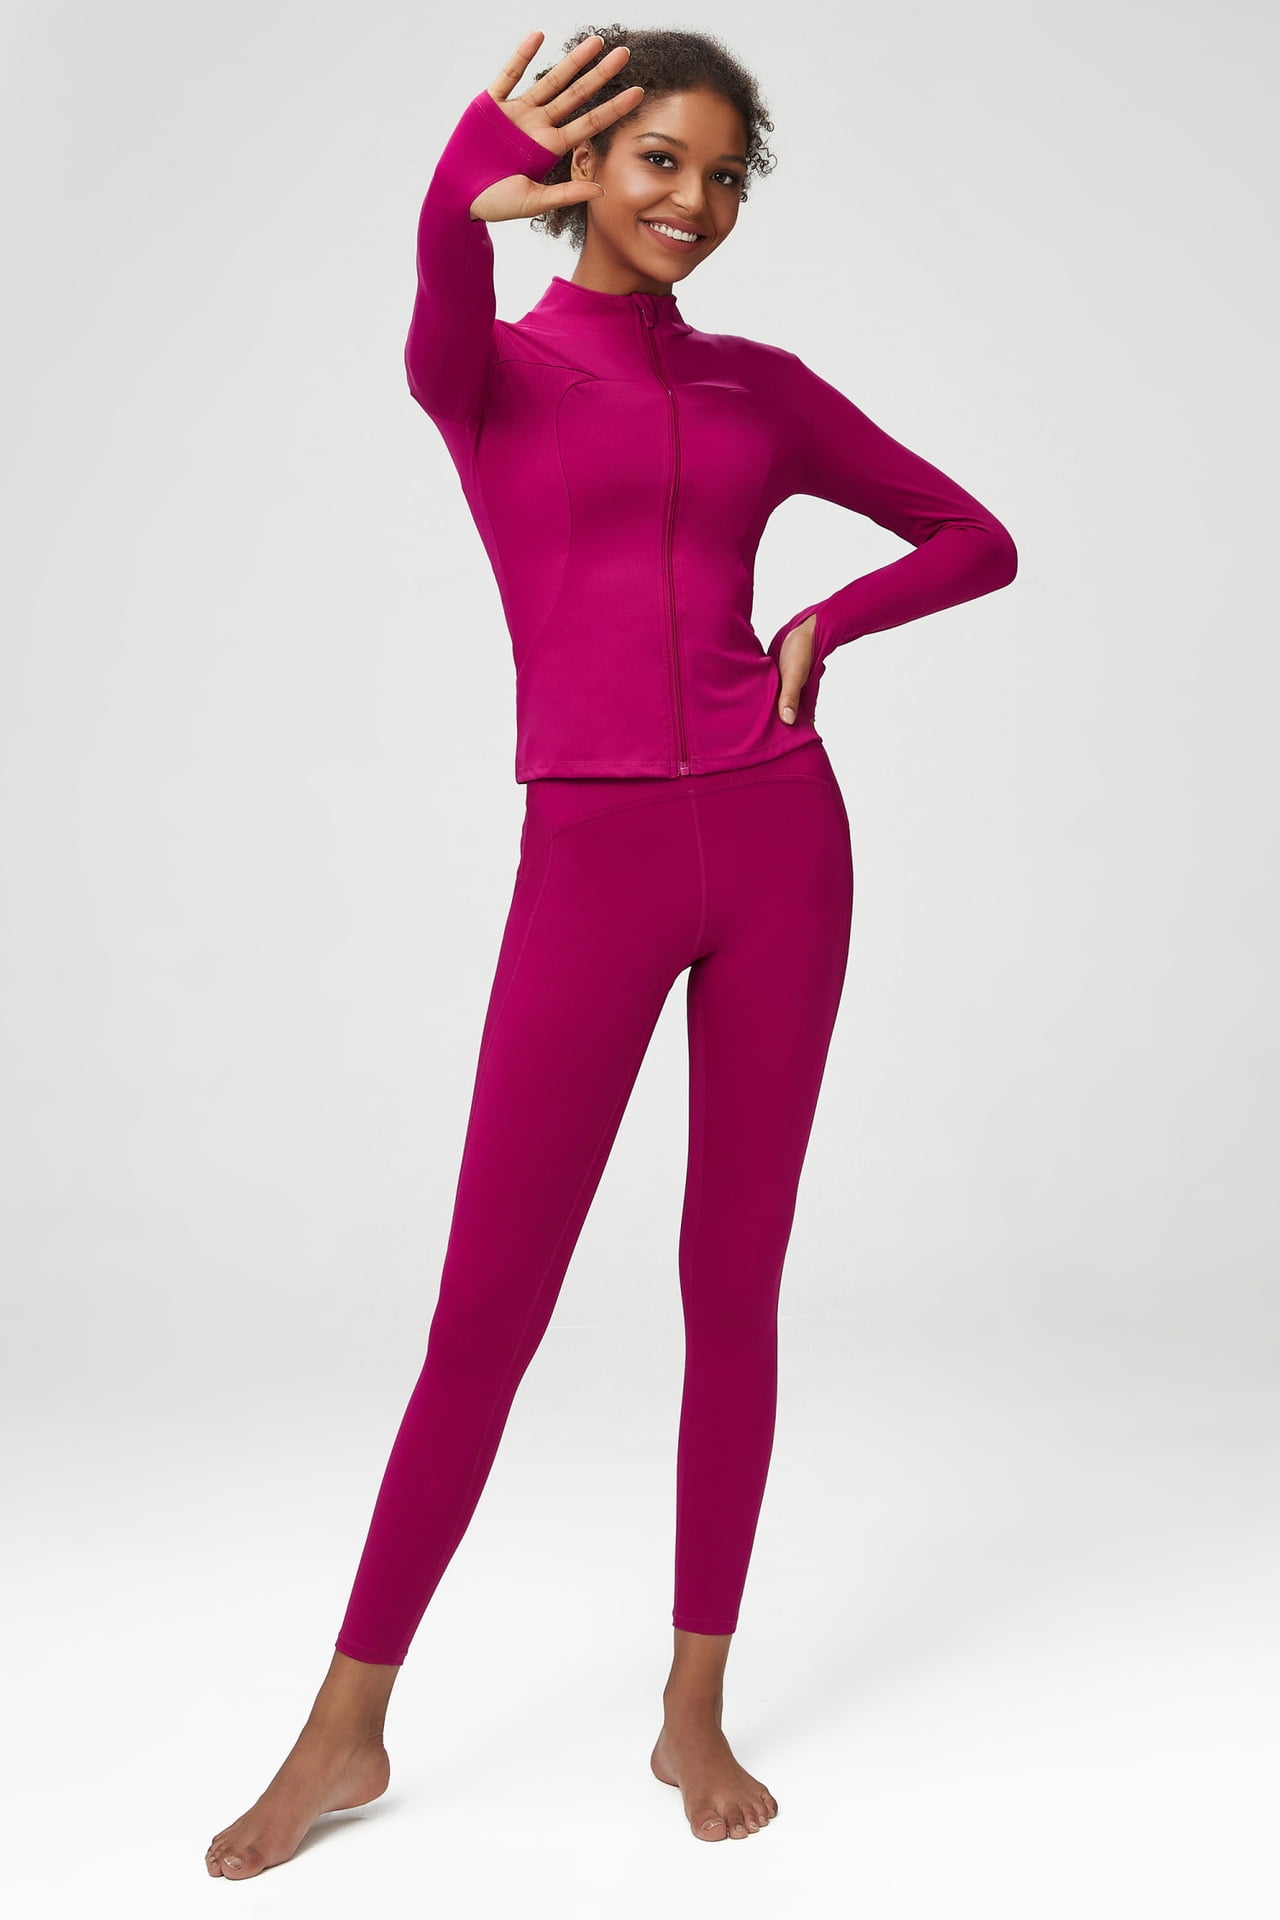 Women 3PCS Yoga Set Full Zip Up Running Track Jacket with Fitness Bras High  Waist Leggings Tights-Fitting Sportswear 